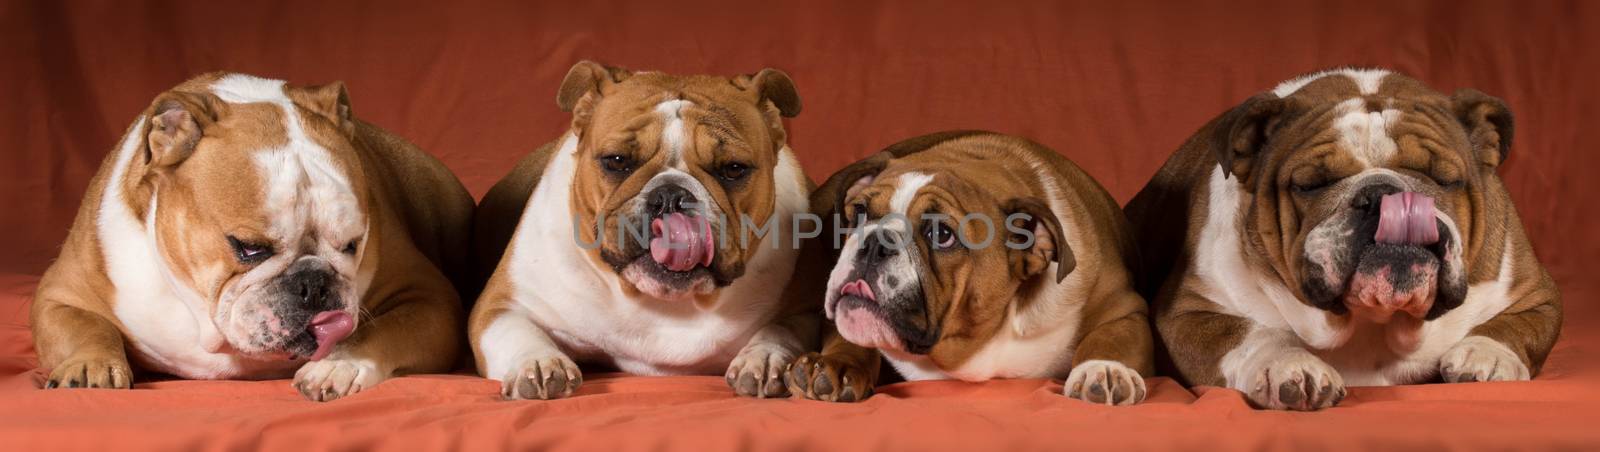 four english bulldogs all licking on orange background